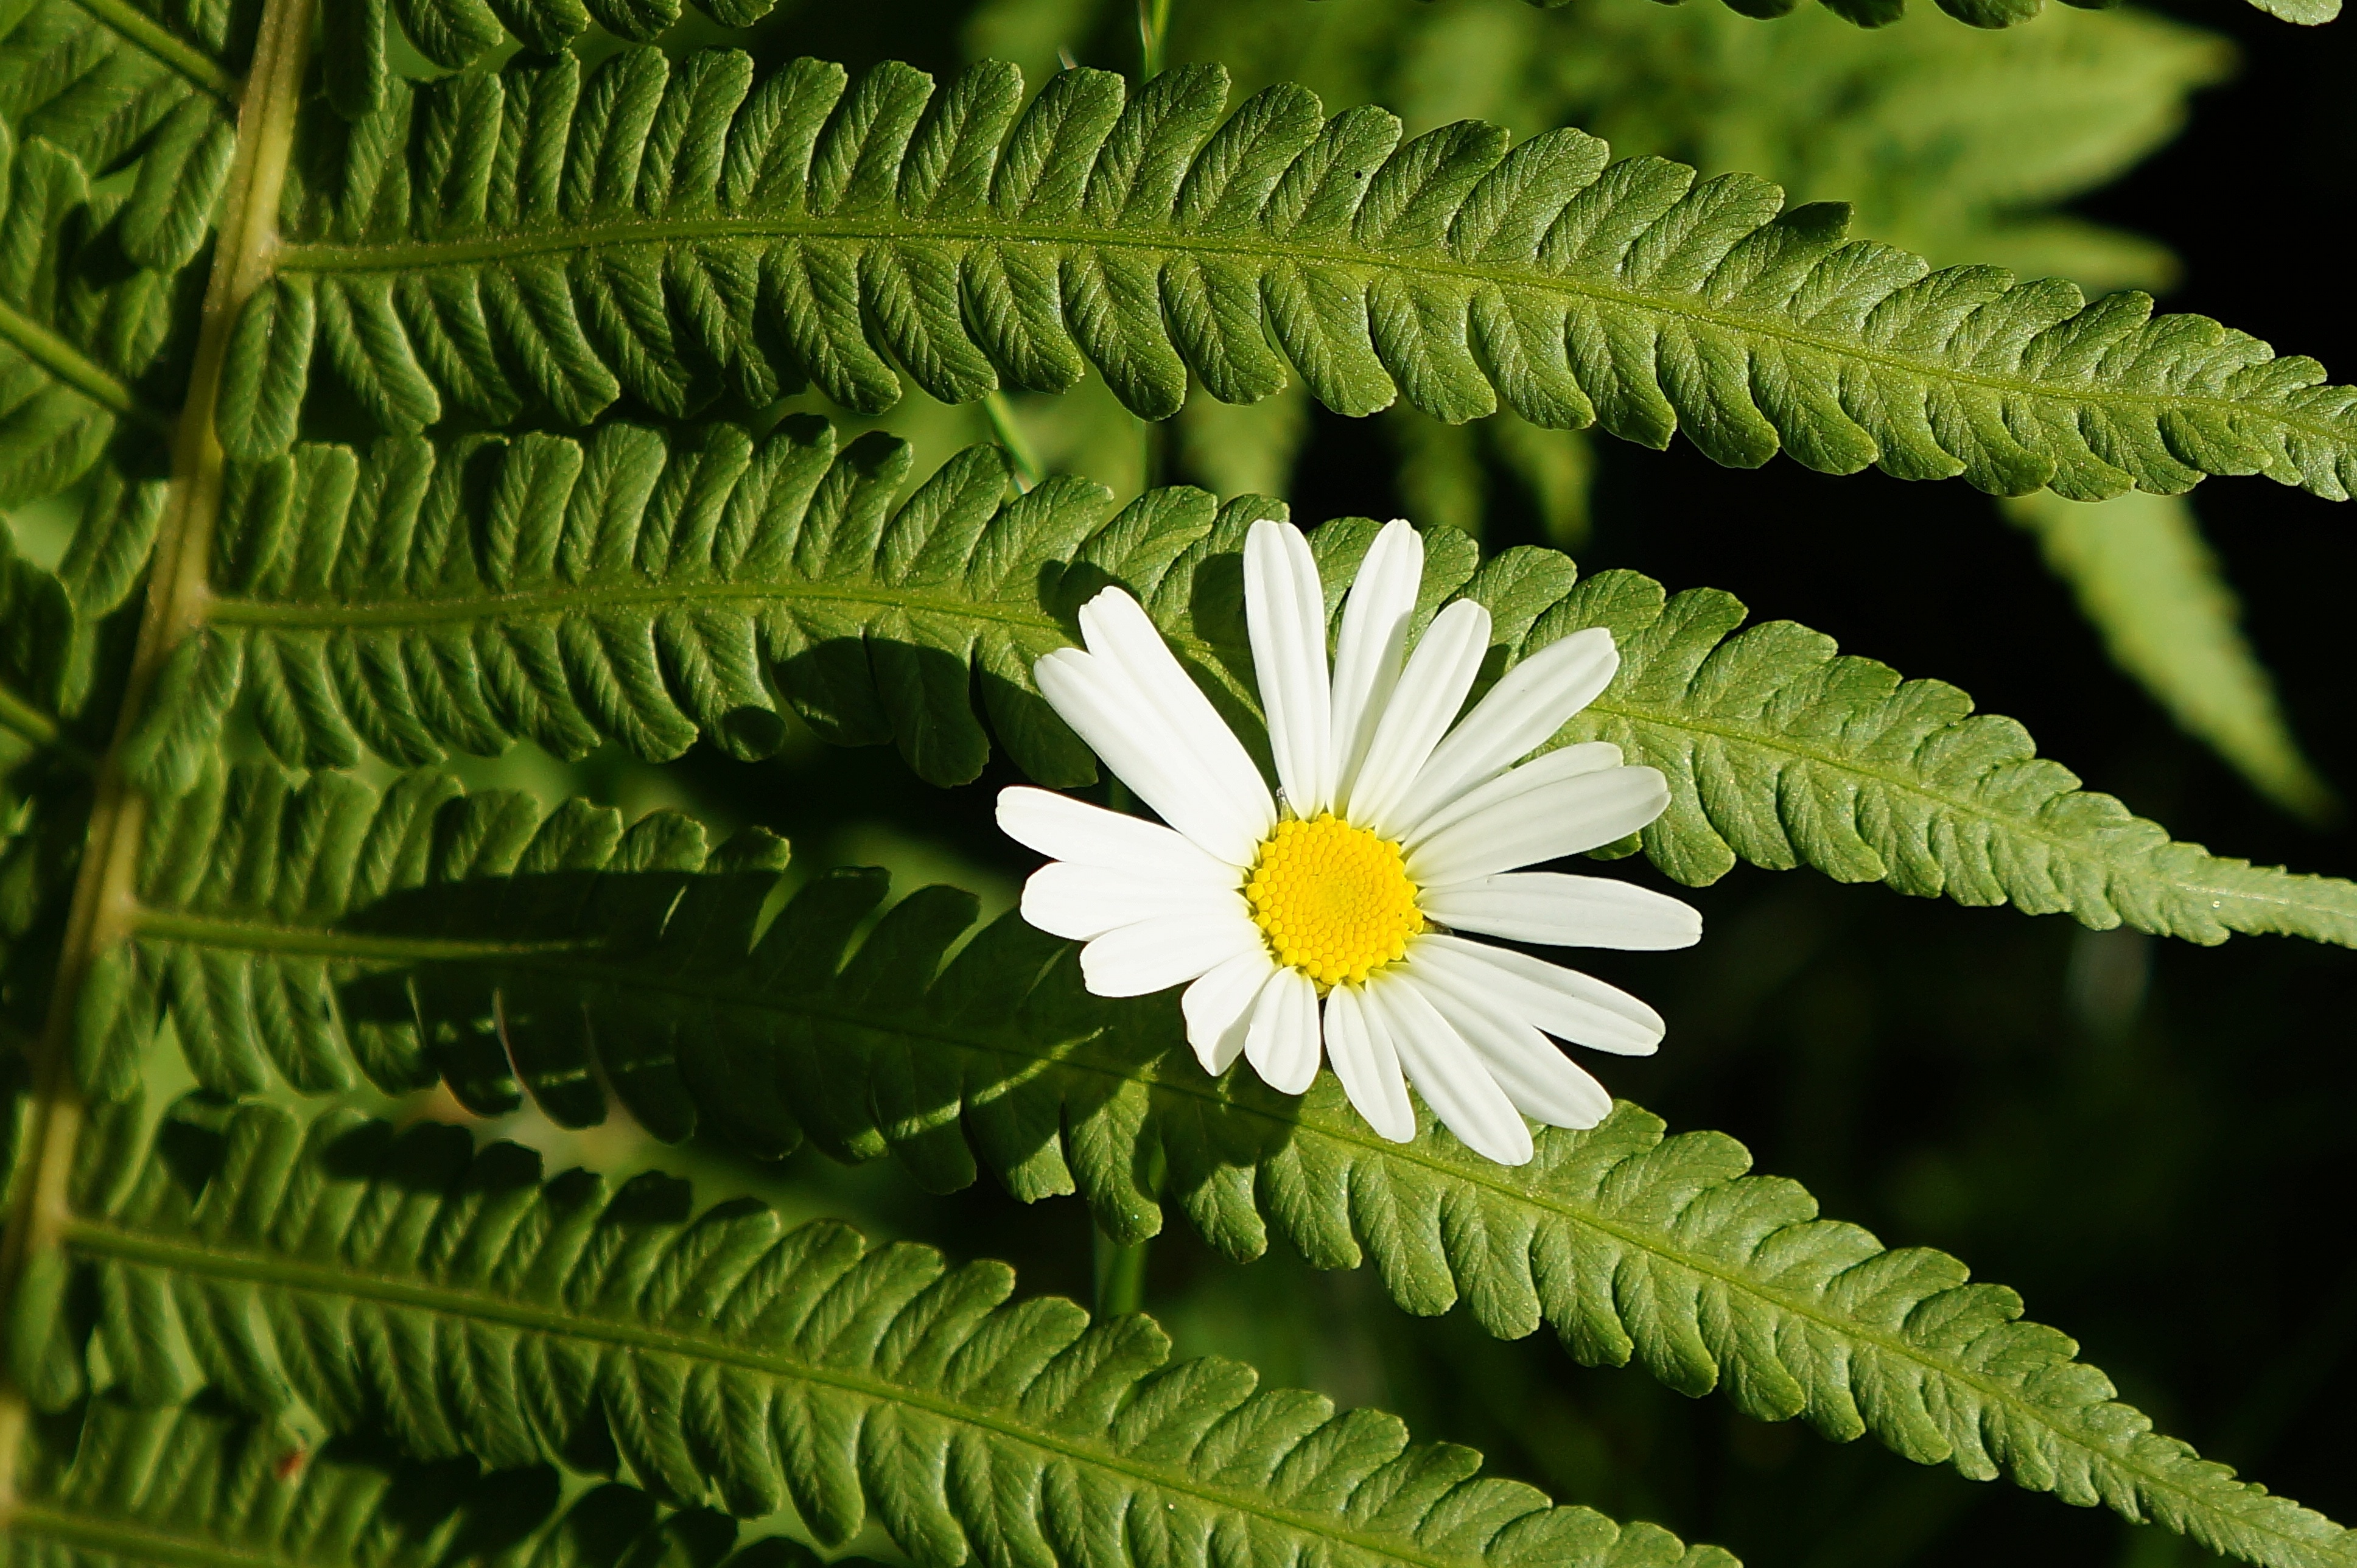 white daisy flower and green fern